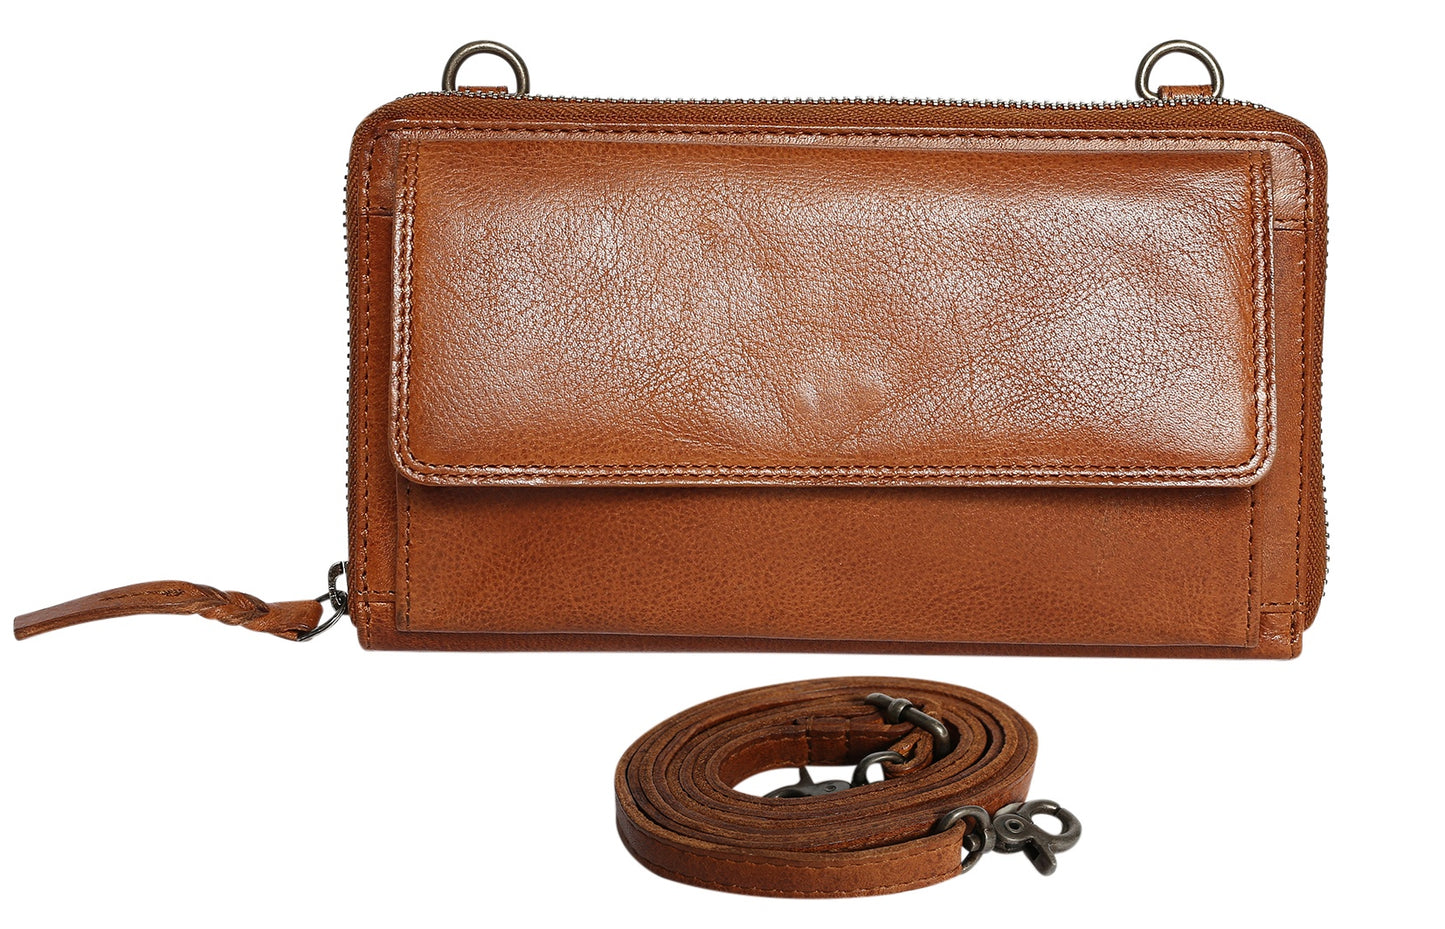 Modapelle - Soft Cow Leather Ladies Wallet/Cross Body Bag | MODA7691TAN